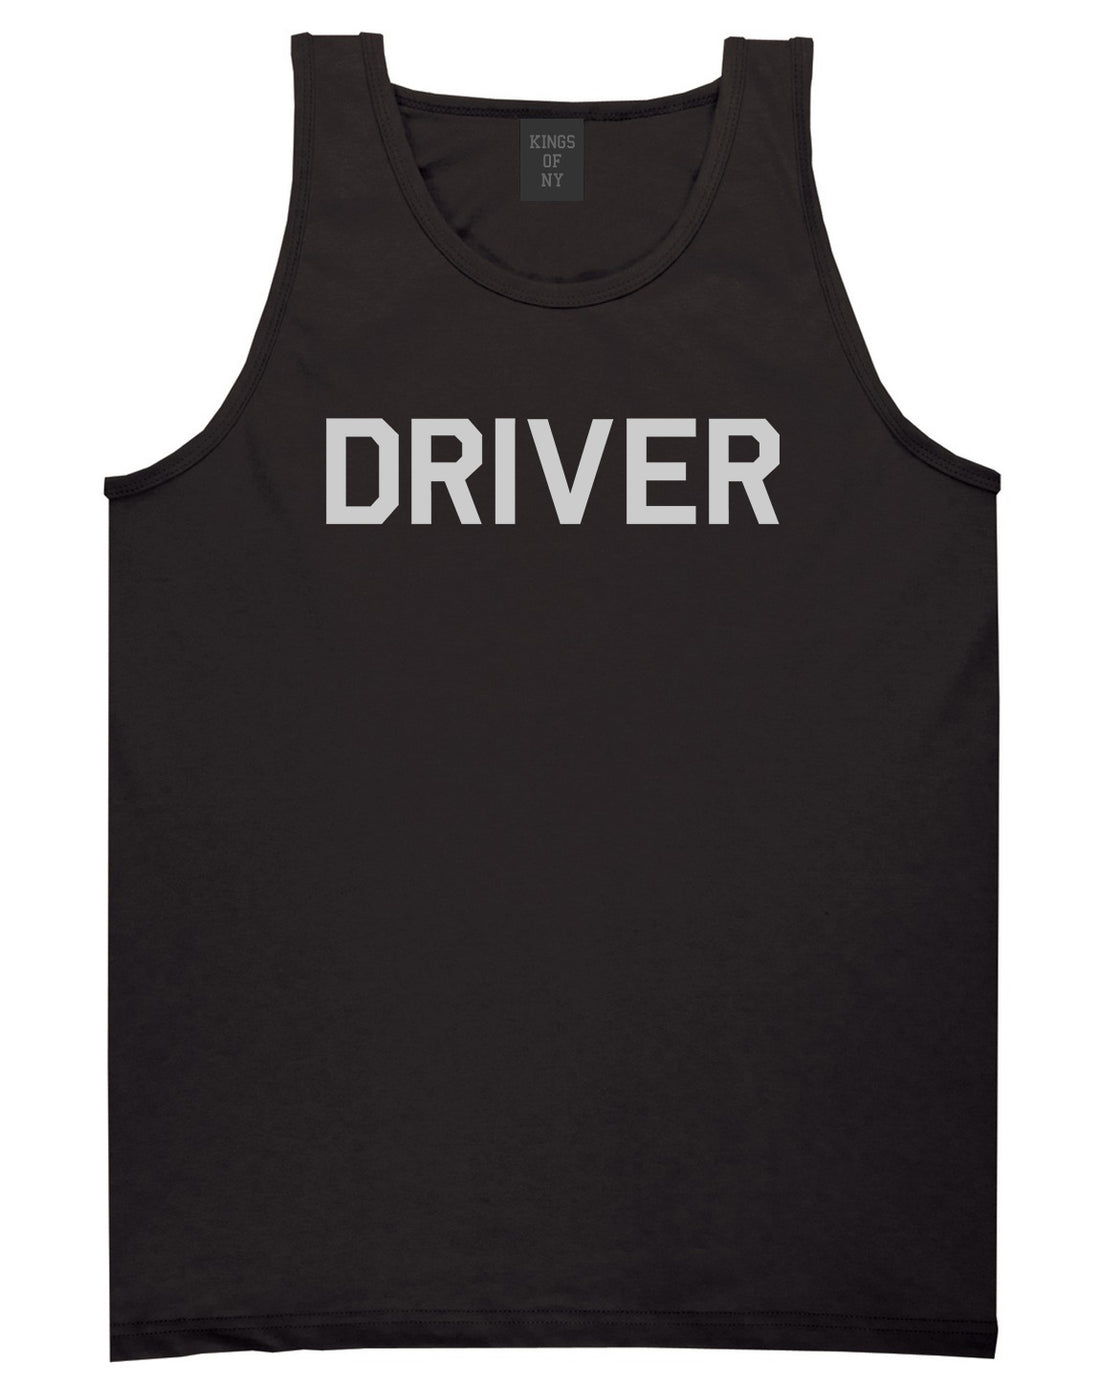 Driver_Drive Mens Black Tank Top Shirt by Kings Of NY